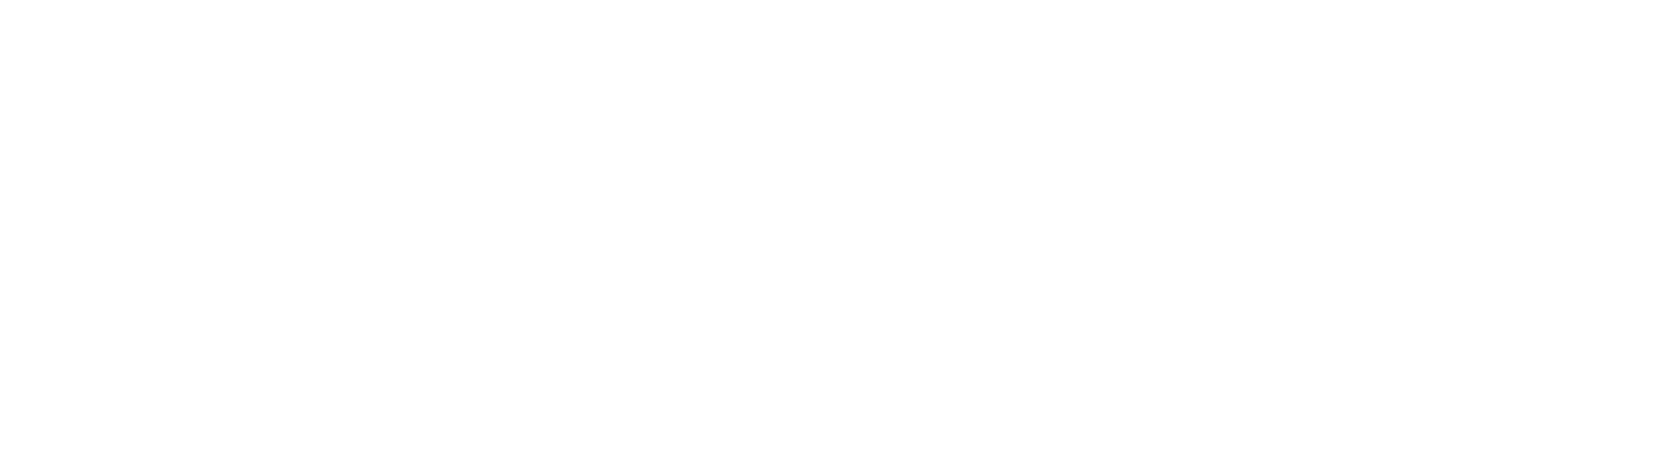 Middletown Township Logo